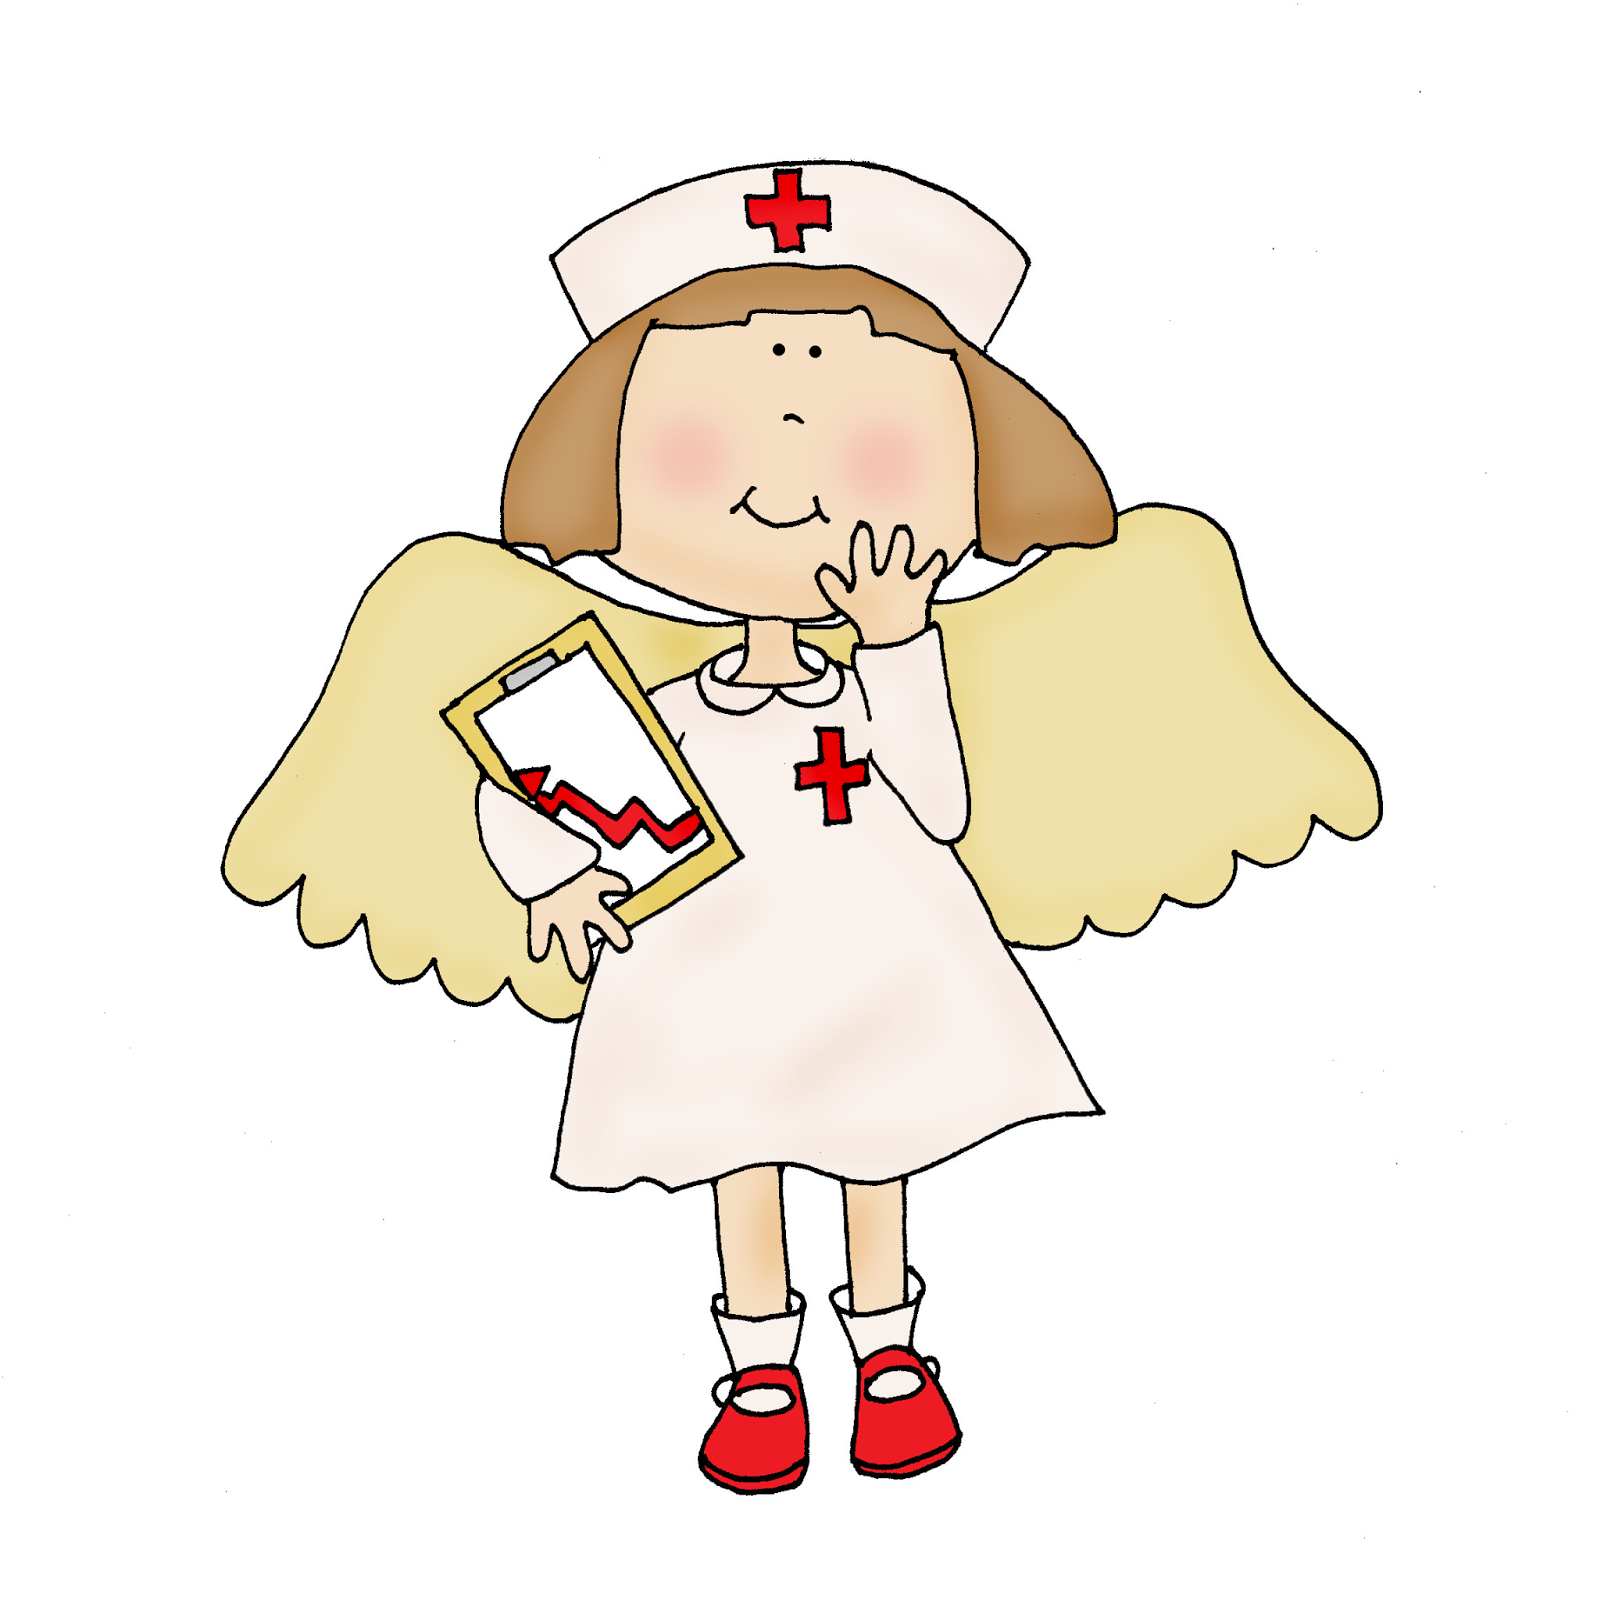 nurse clipart angel